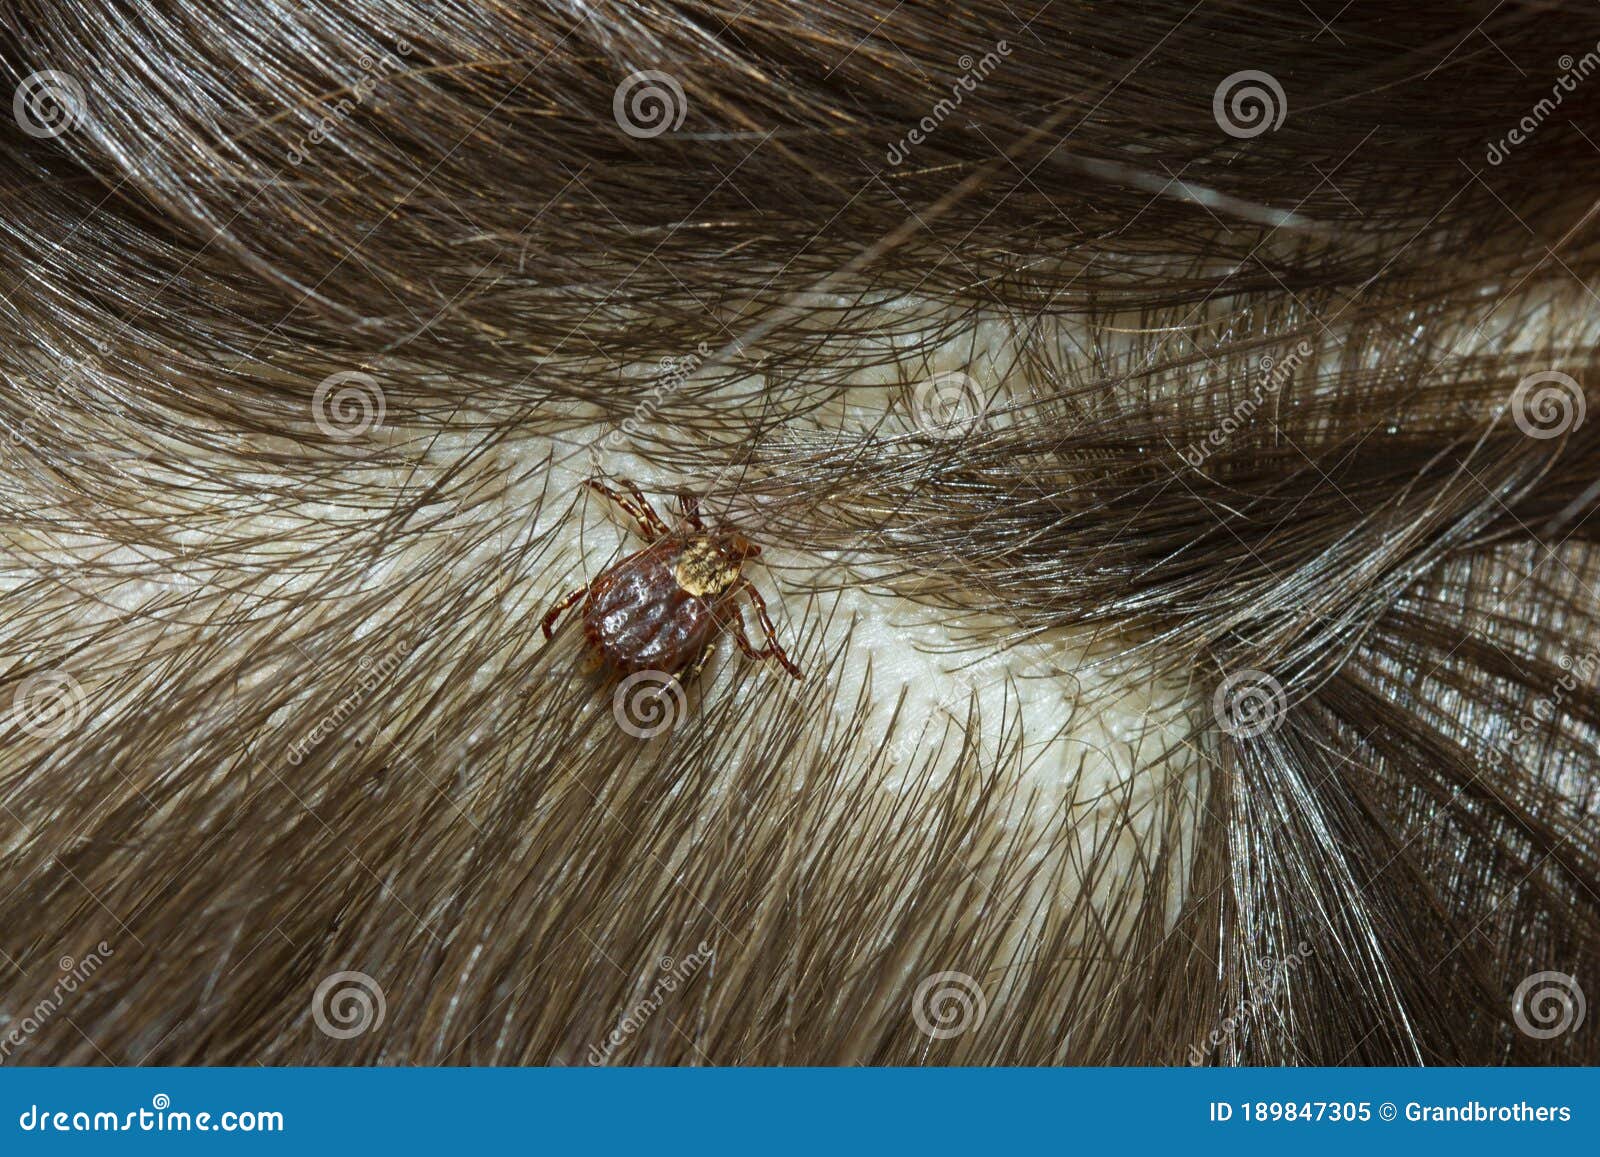 Tick stumbling through human hair  Stock Video Clip  K0036569  Science  Photo Library